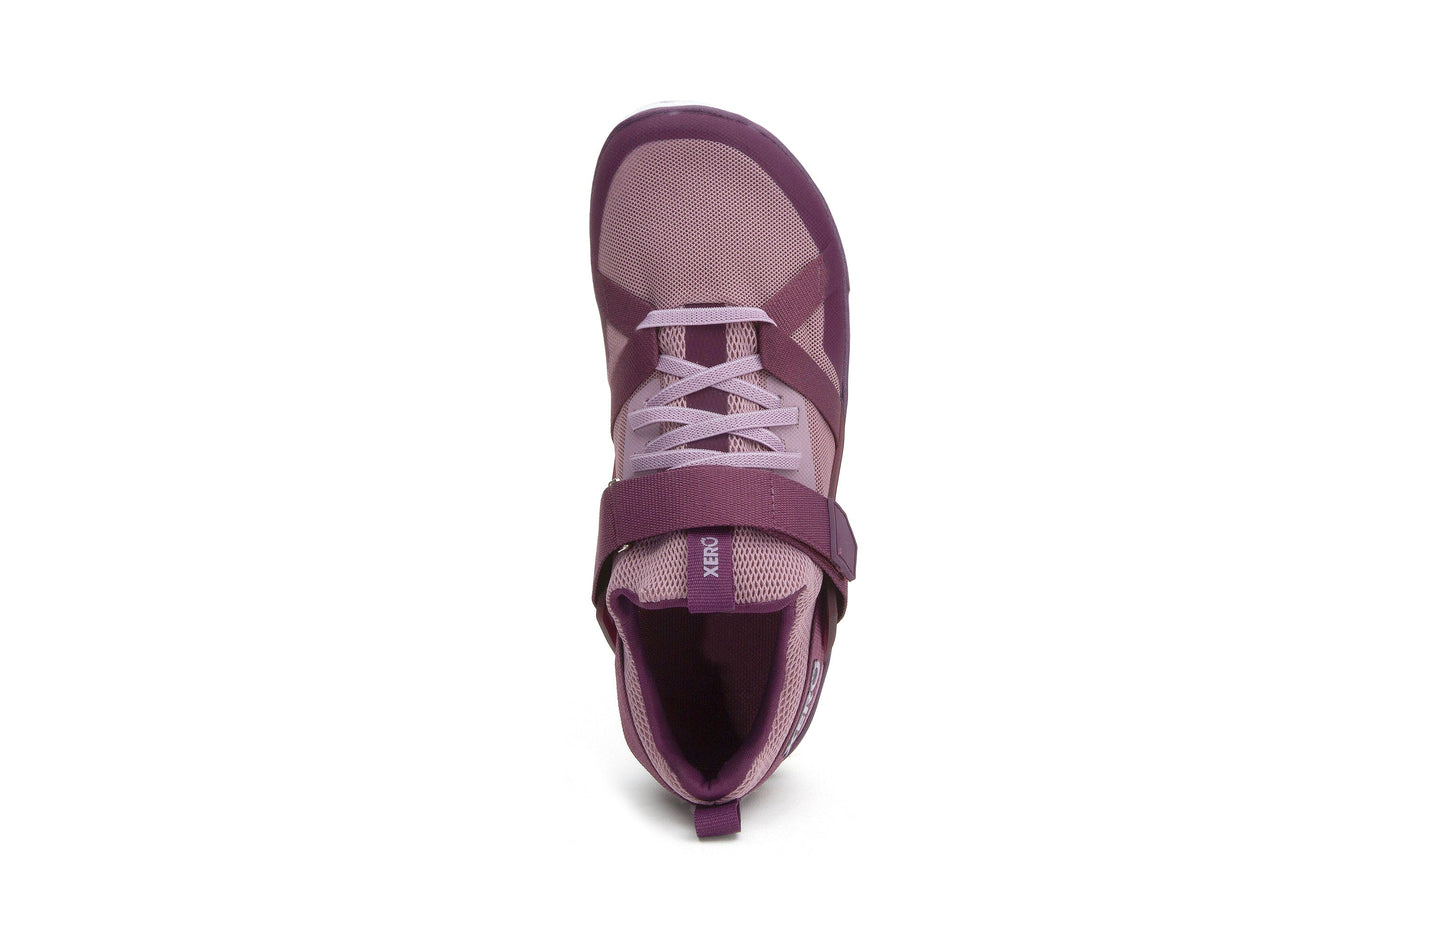 Xero Shoes Forza Trainer Womens barfods træningssko til kvinder i farven elderberry / fig, top